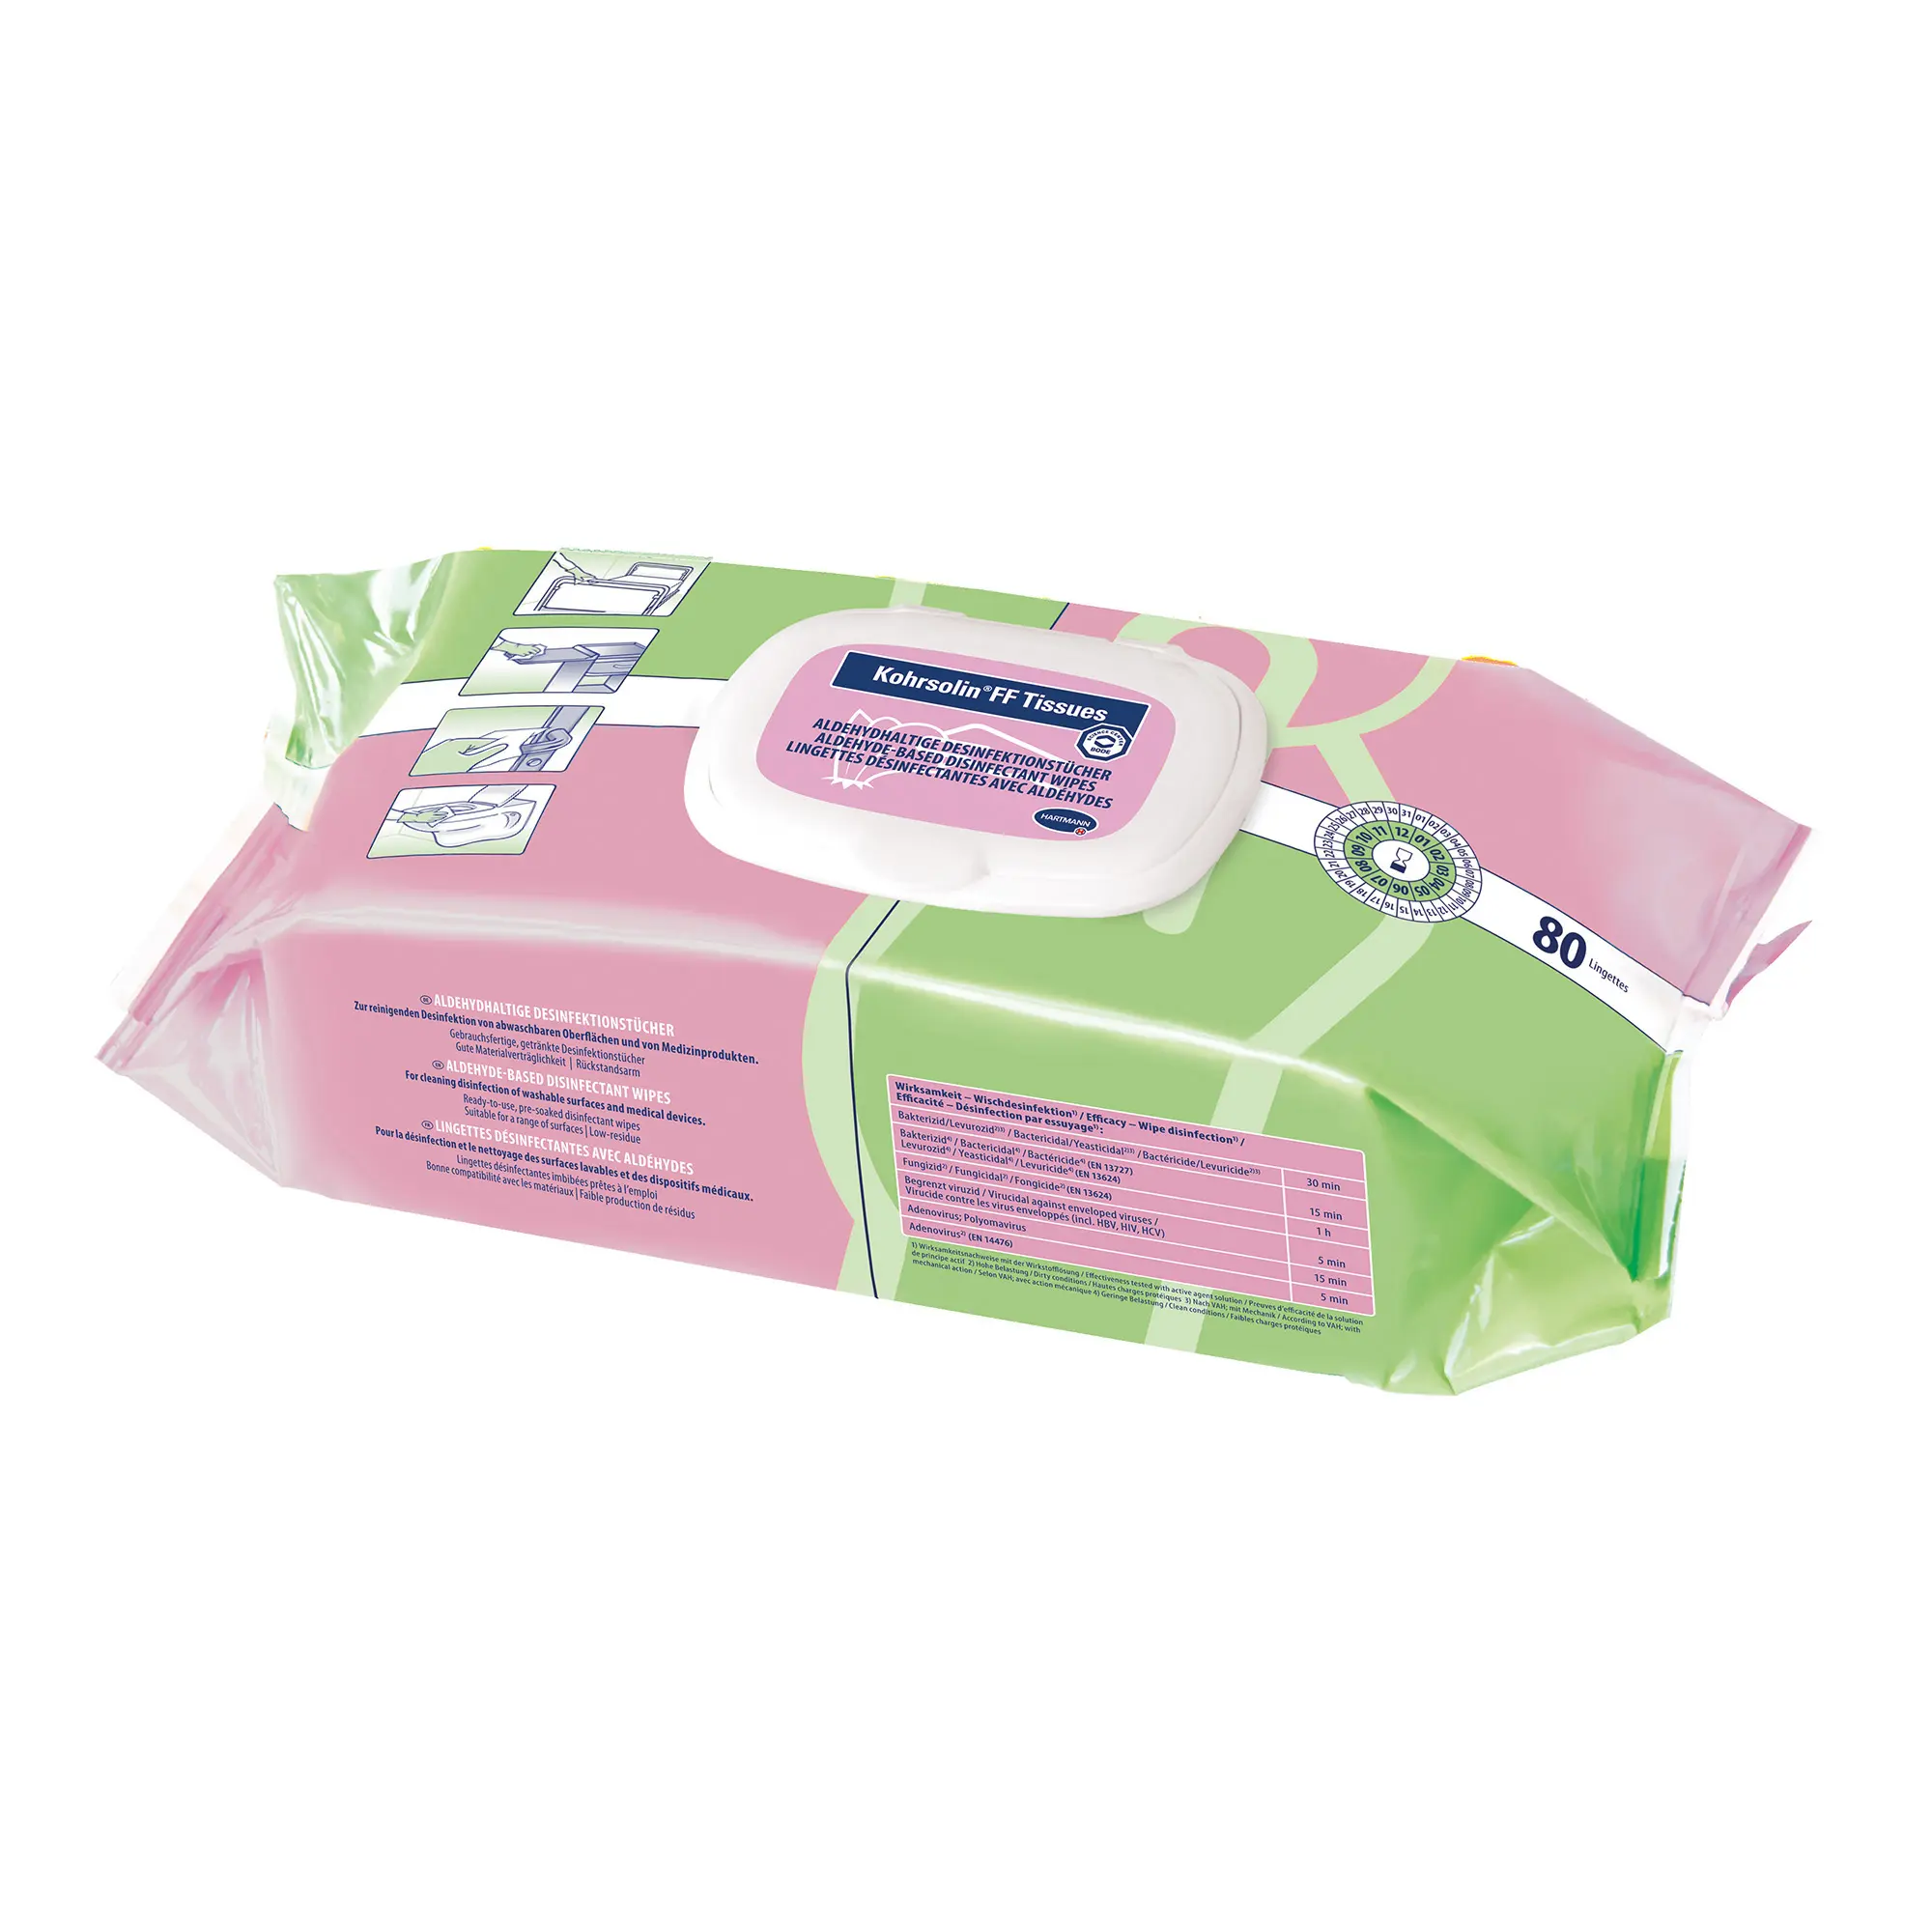 Bode Kohrsolin FF Tissues Flow-Pack aldehydhaltige Desinfektionstücher 80 Tücher 981201_1